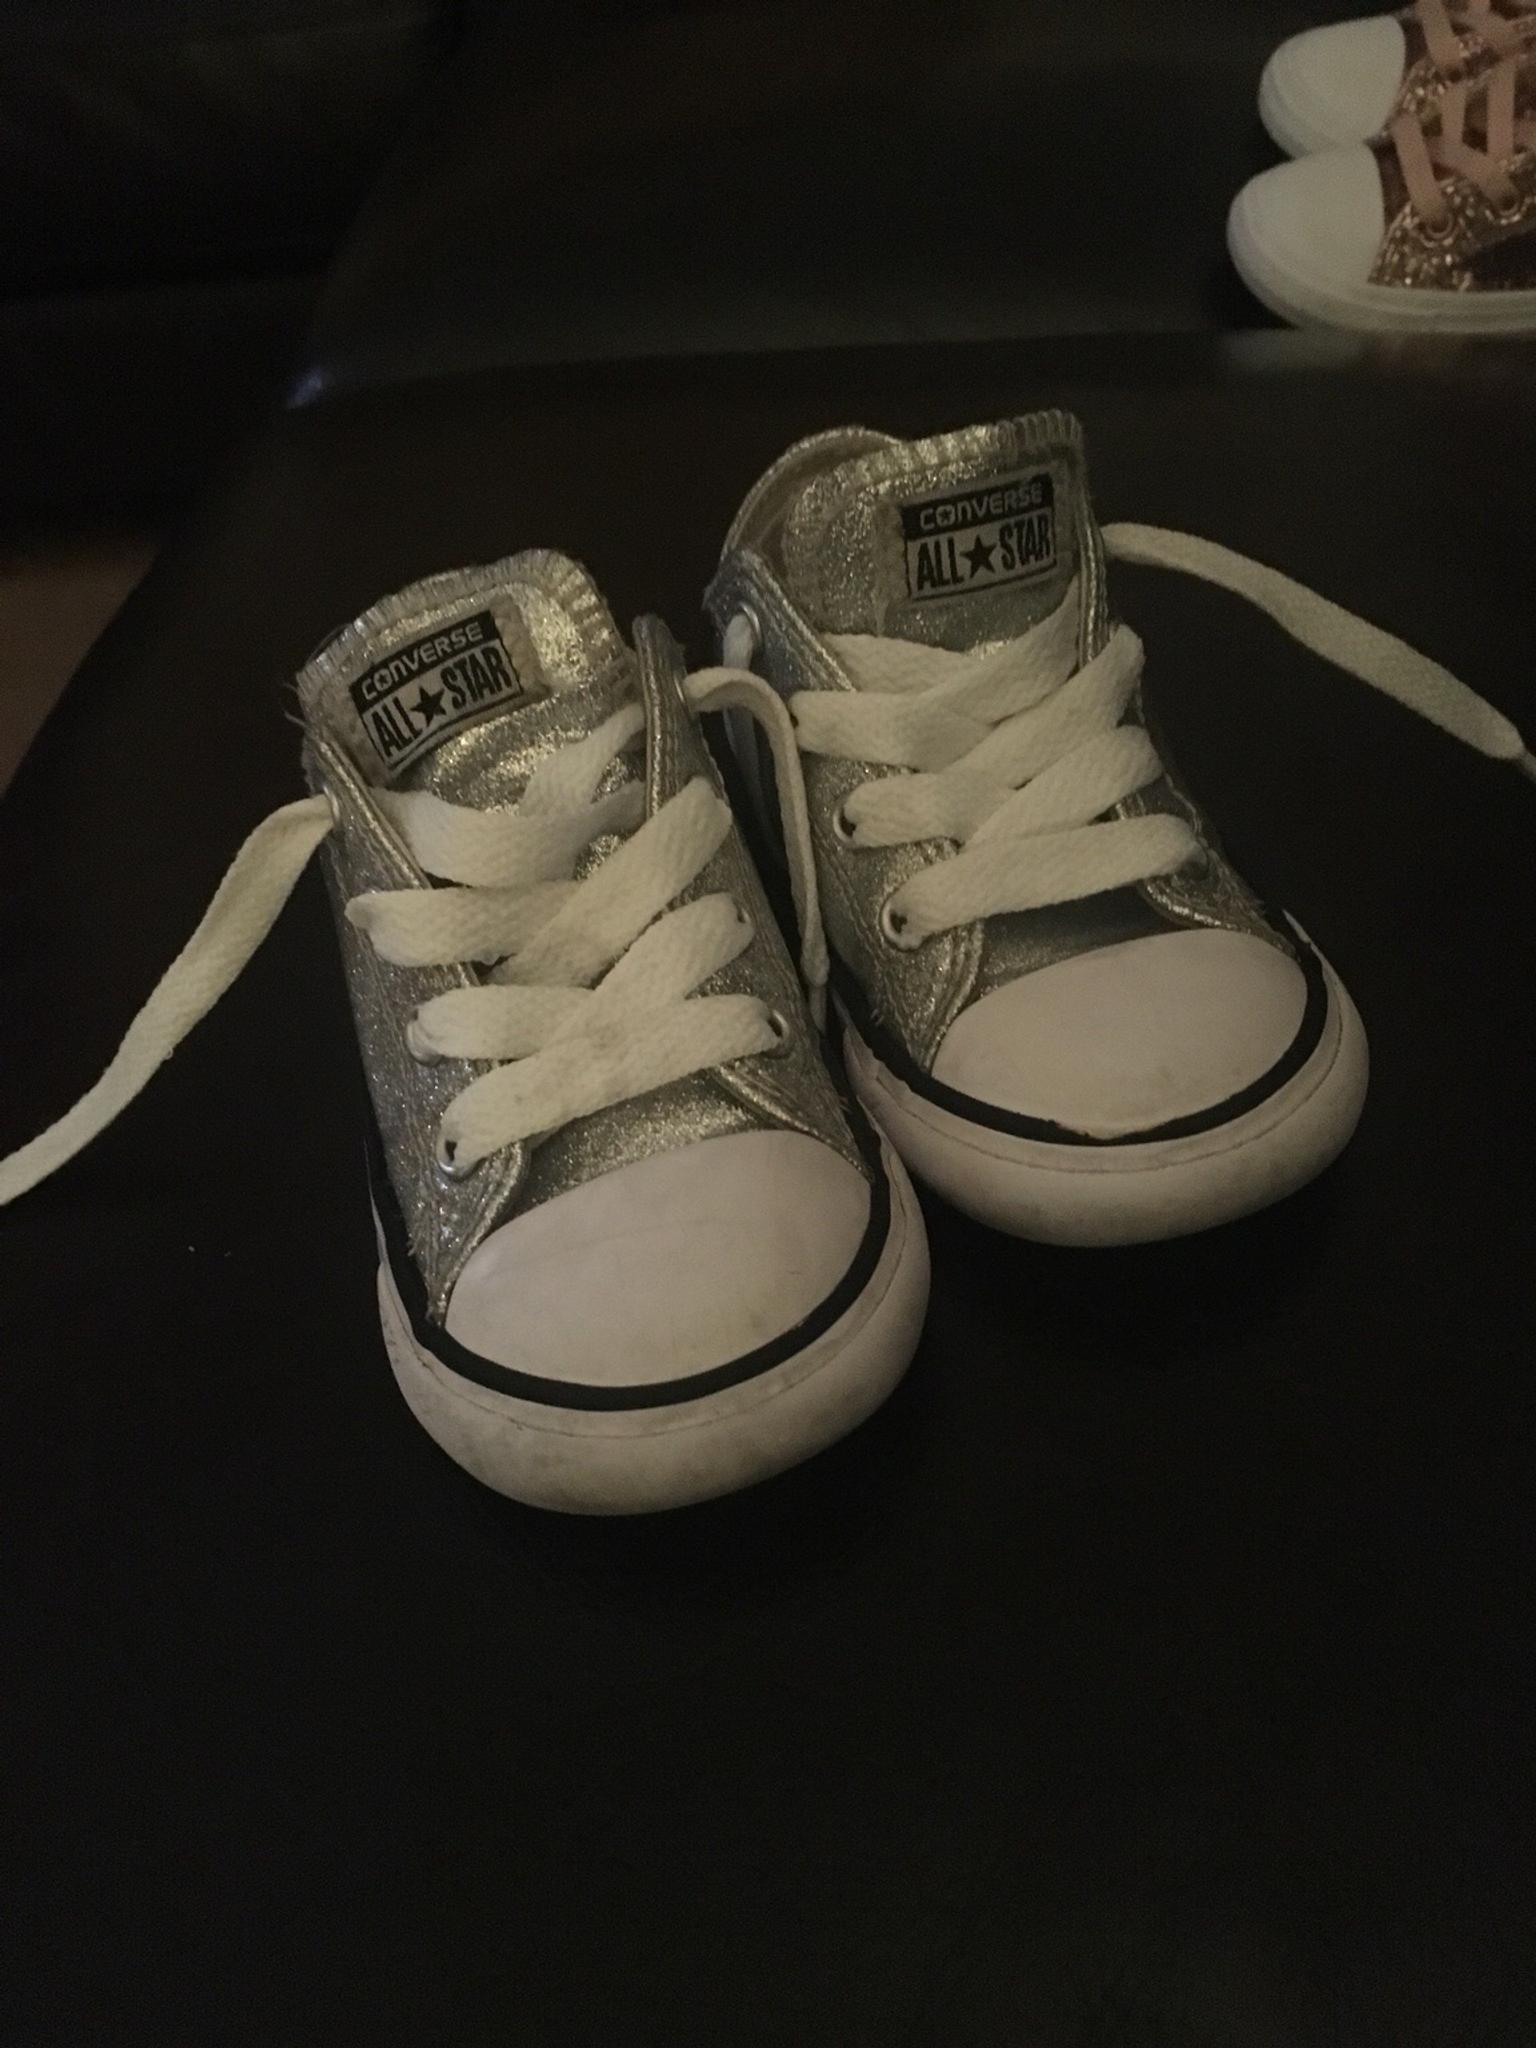 silver converse infant